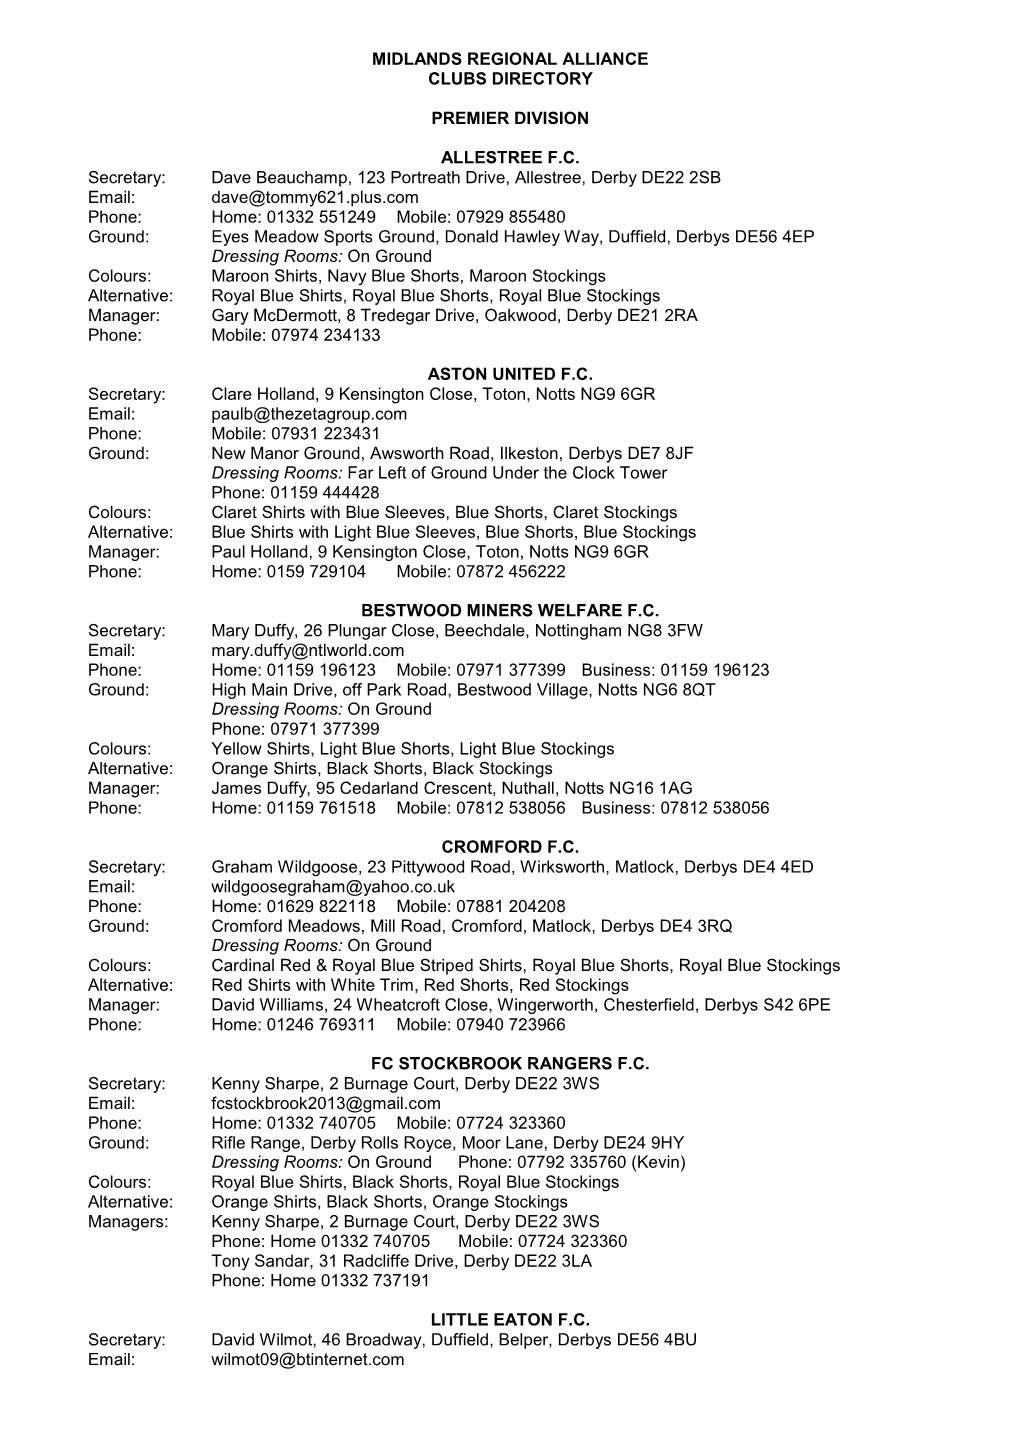 Midlands Regional Alliance Clubs Directory